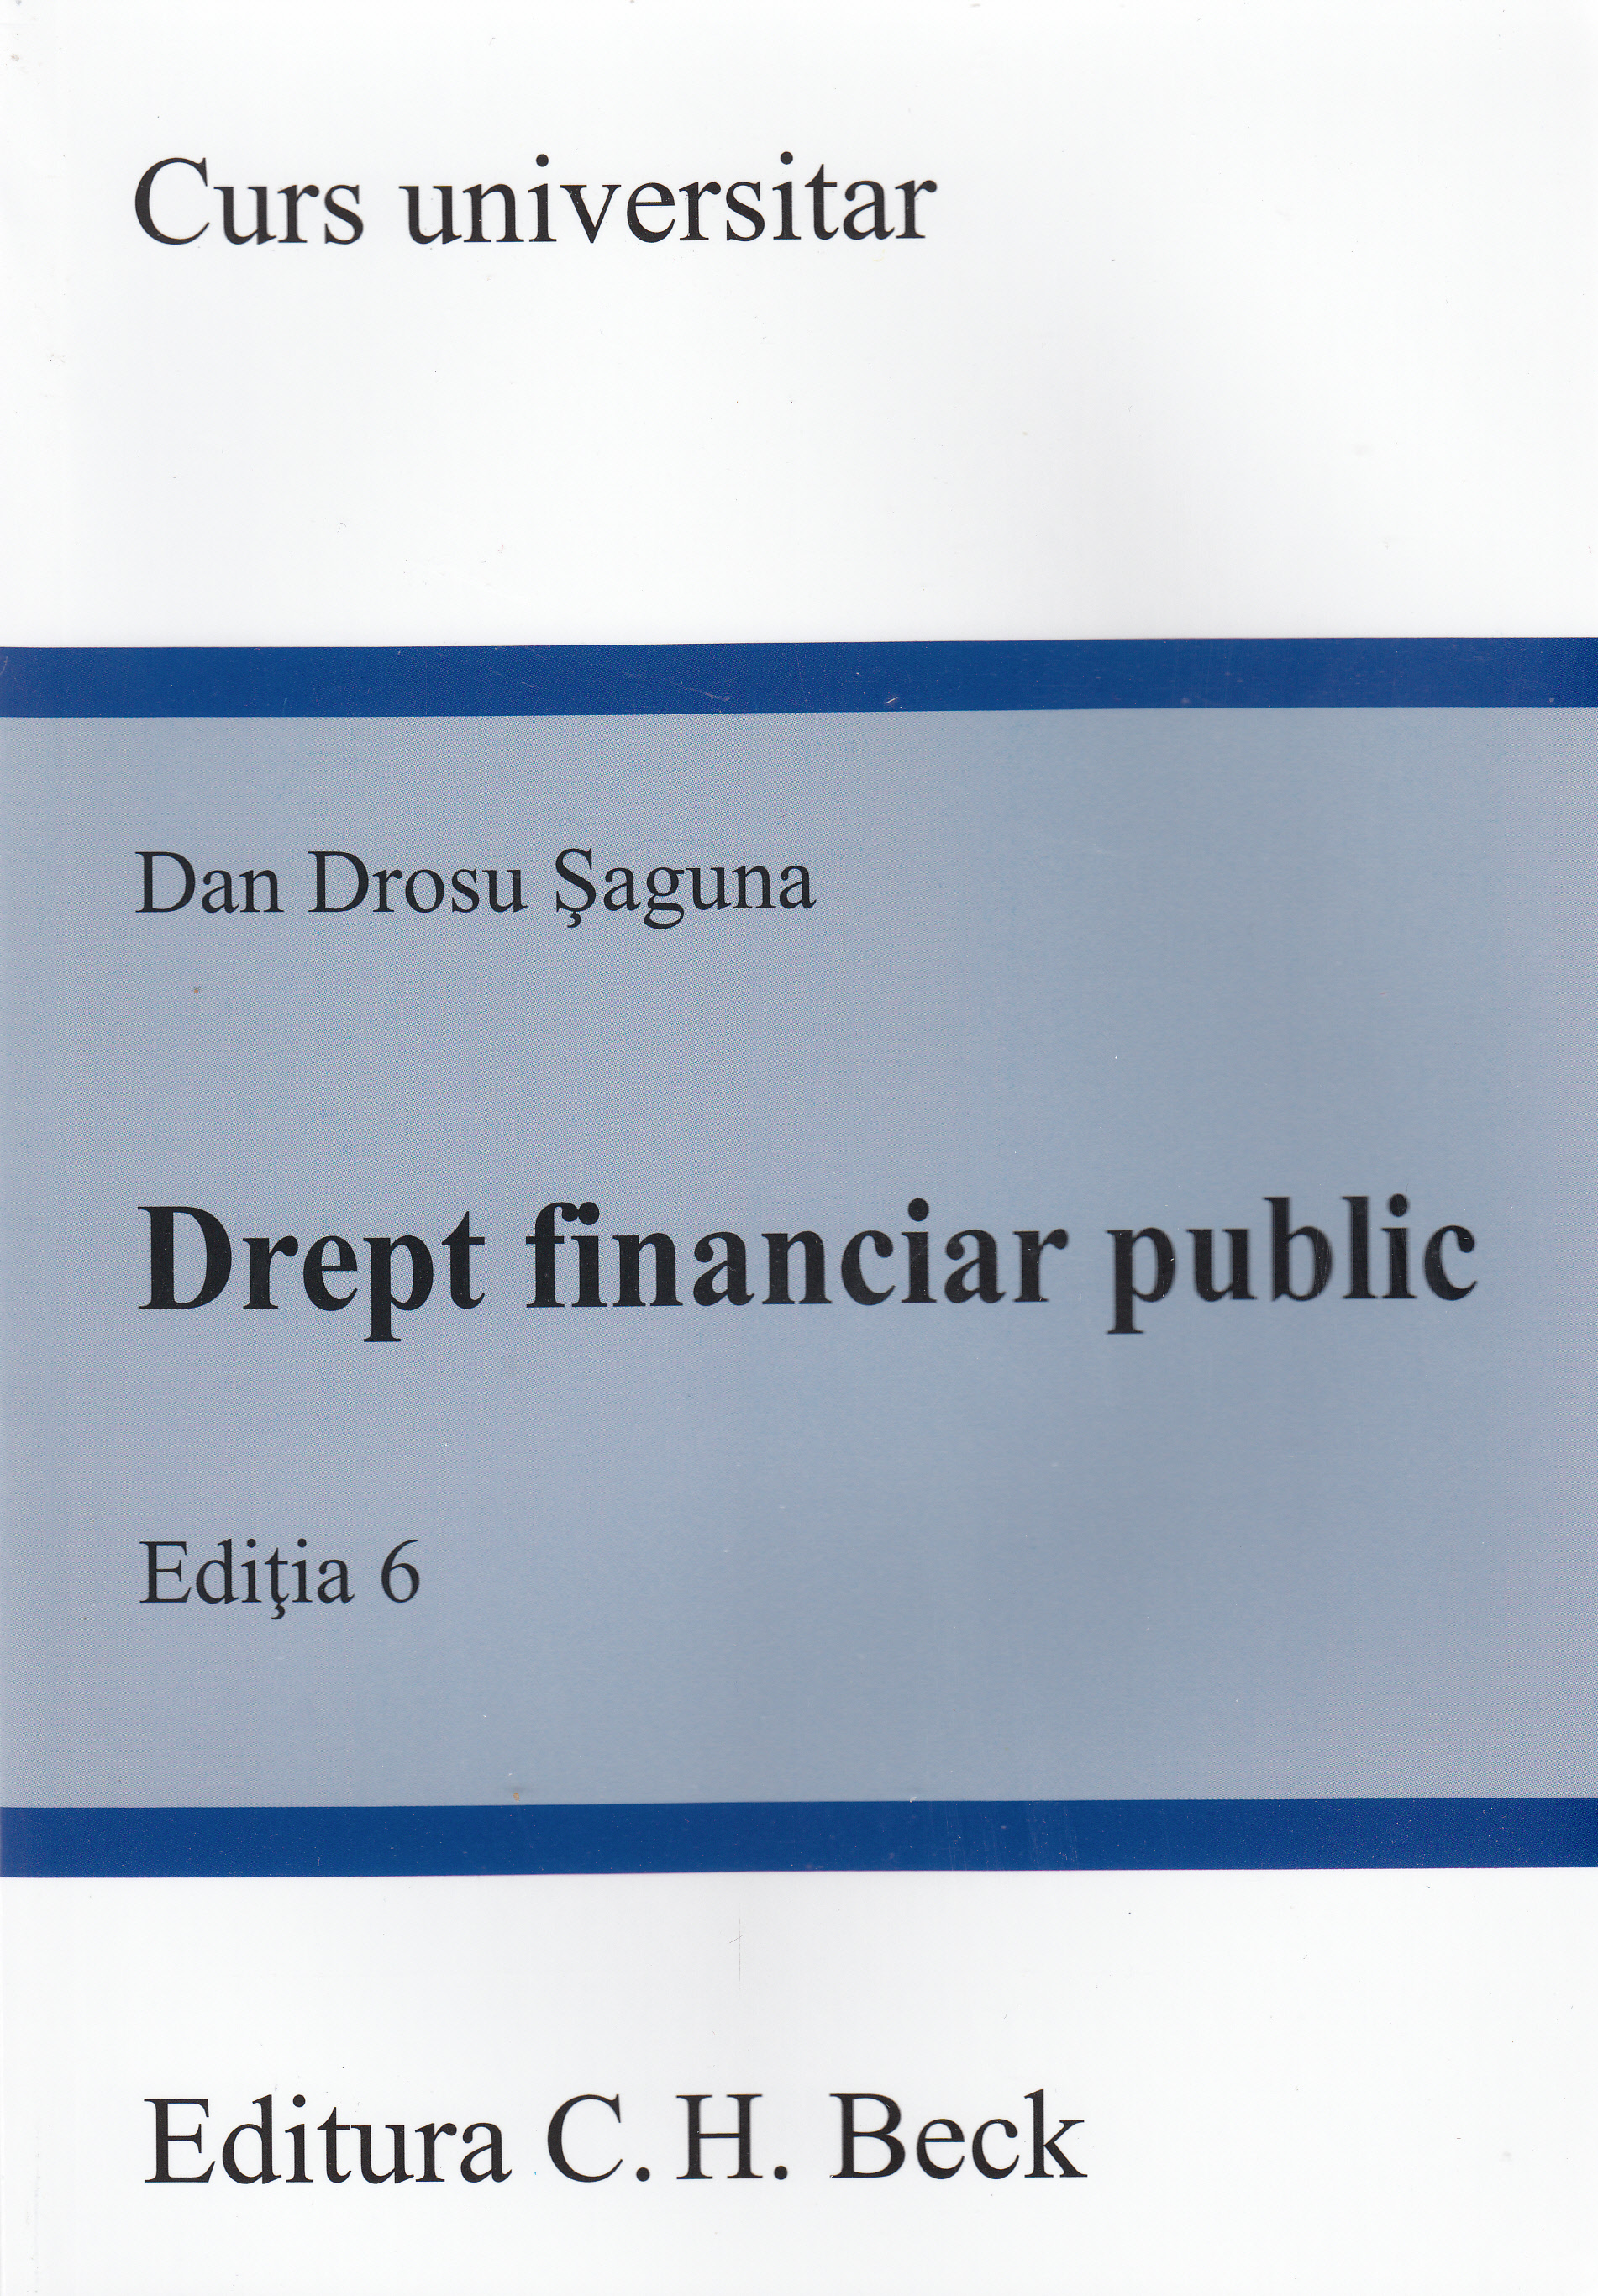 Drept financiar public Ed.6 - Dan Drosu Saguna